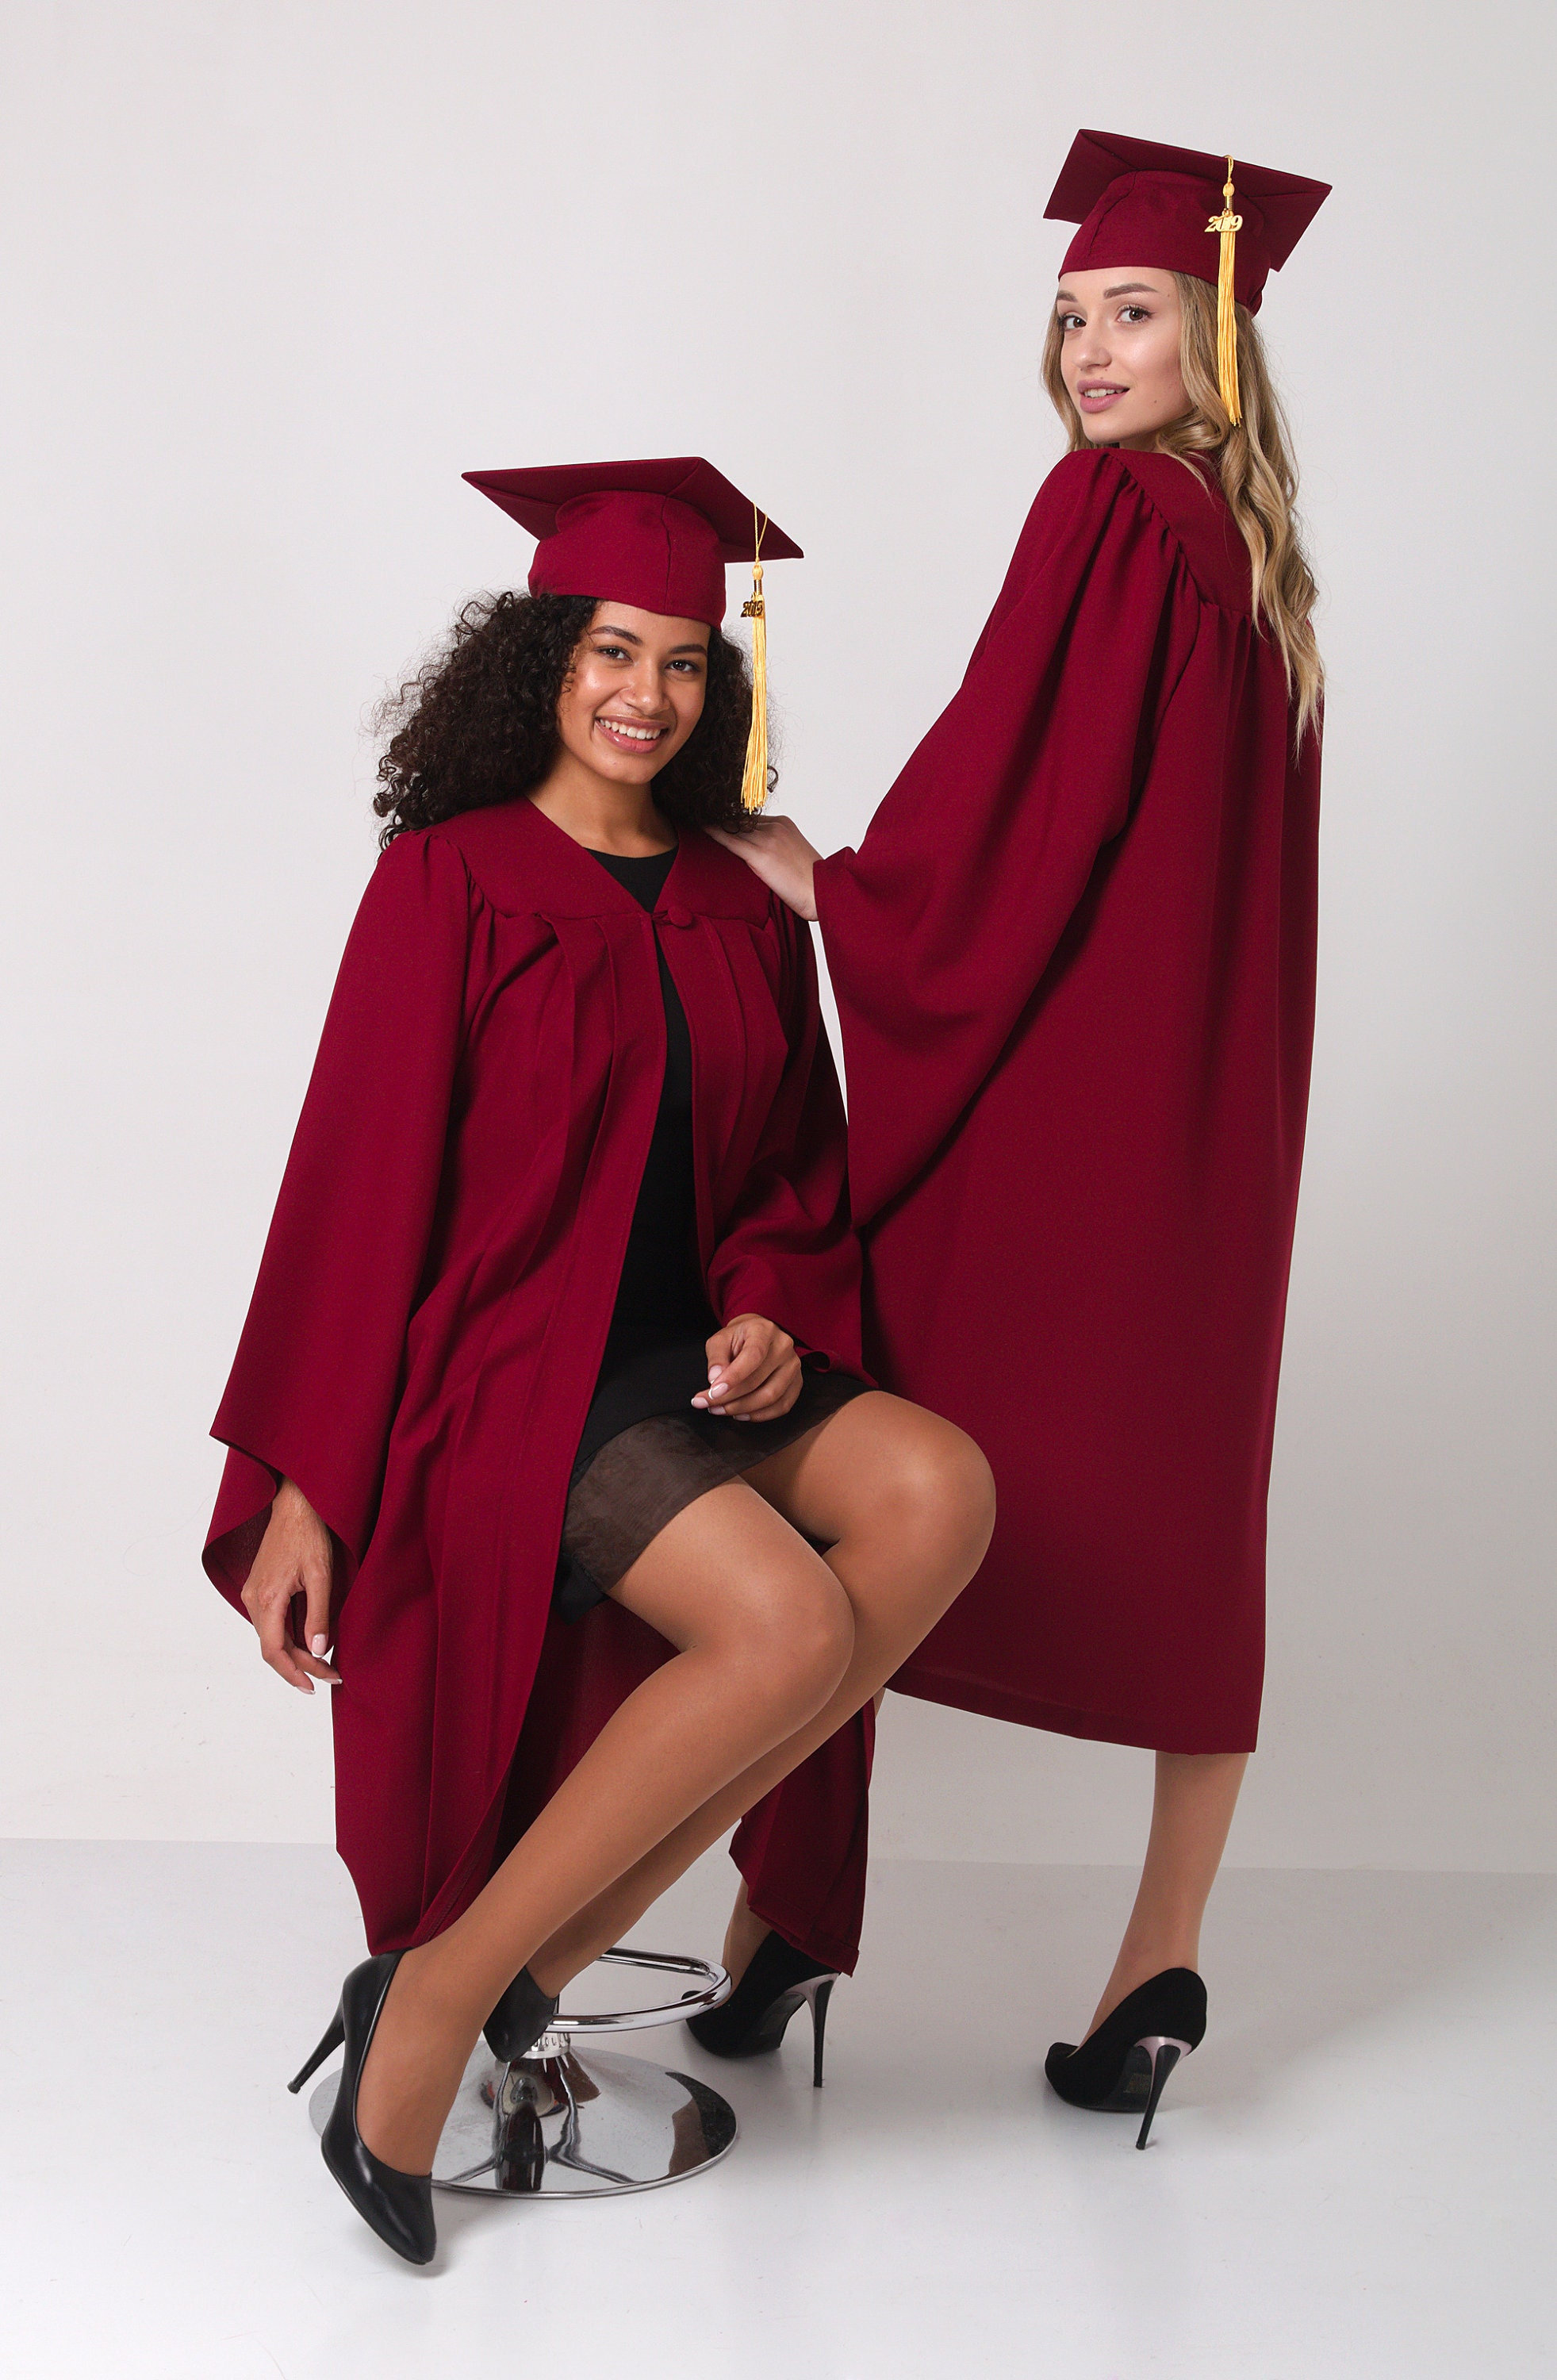  Matte Graduation Cap And Gown 2023 2024 Tassel Graduation  Gown And Cap Tassel Set For Middle&High School Graduation Robe